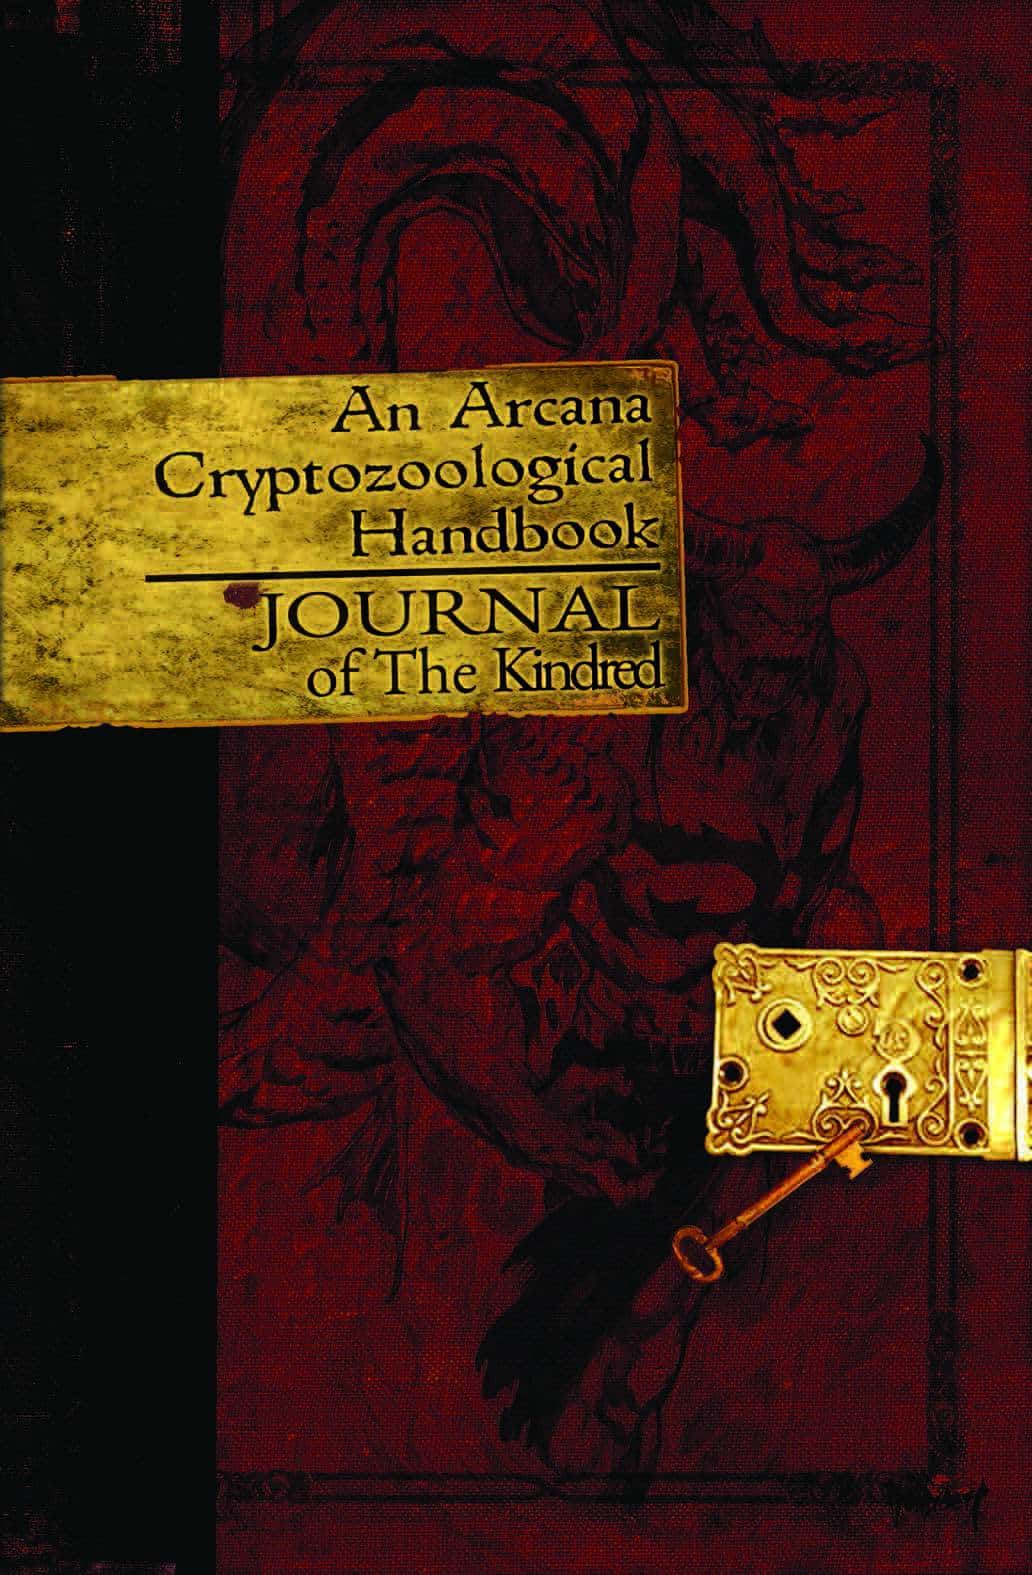 An Arcana Cryptozoology Handbook: Journal of the Kindred 2